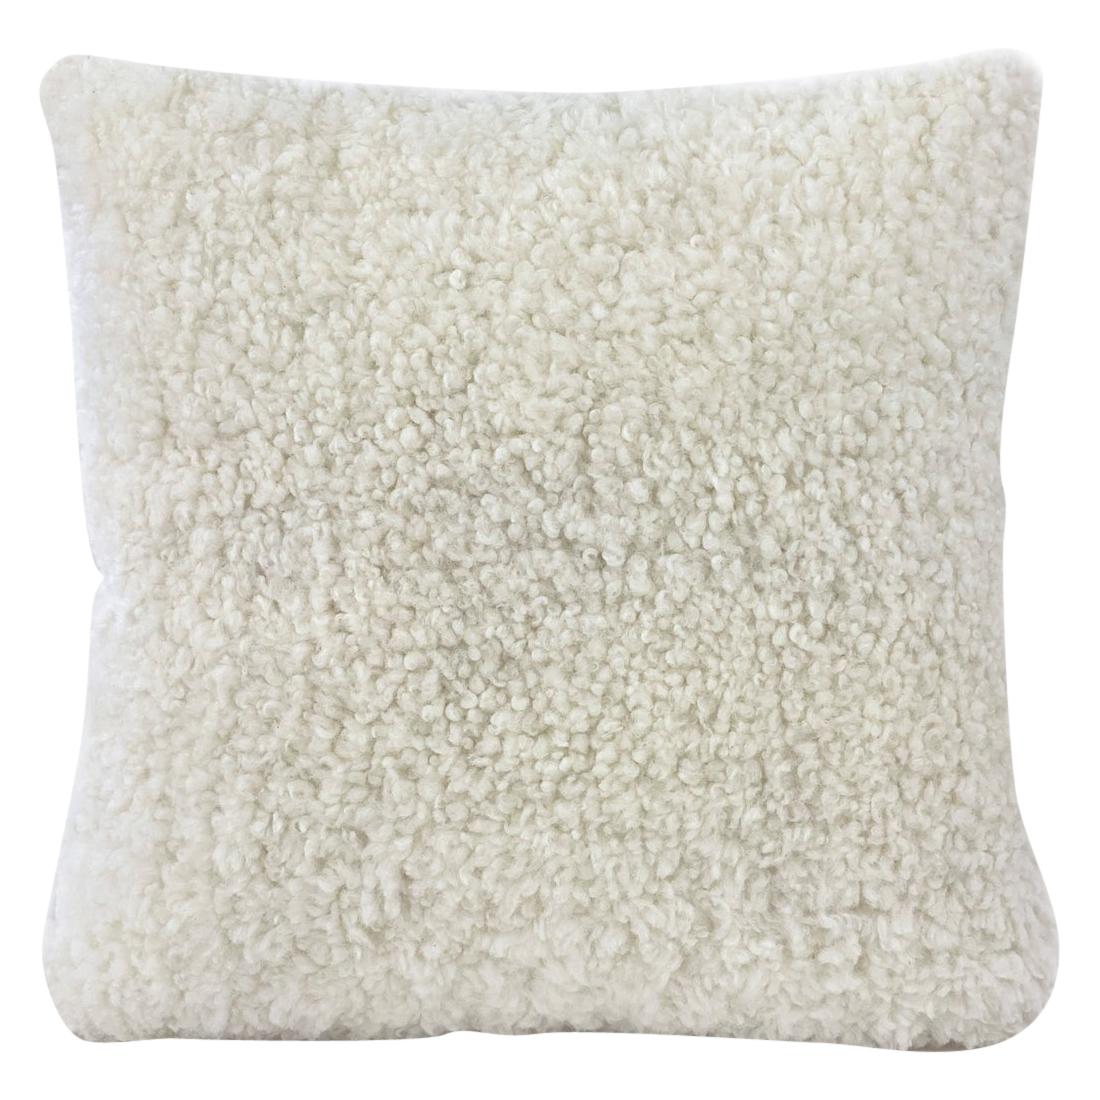 Shearling Sheepskin Pillow, White 50x50cm  20x20" For Sale